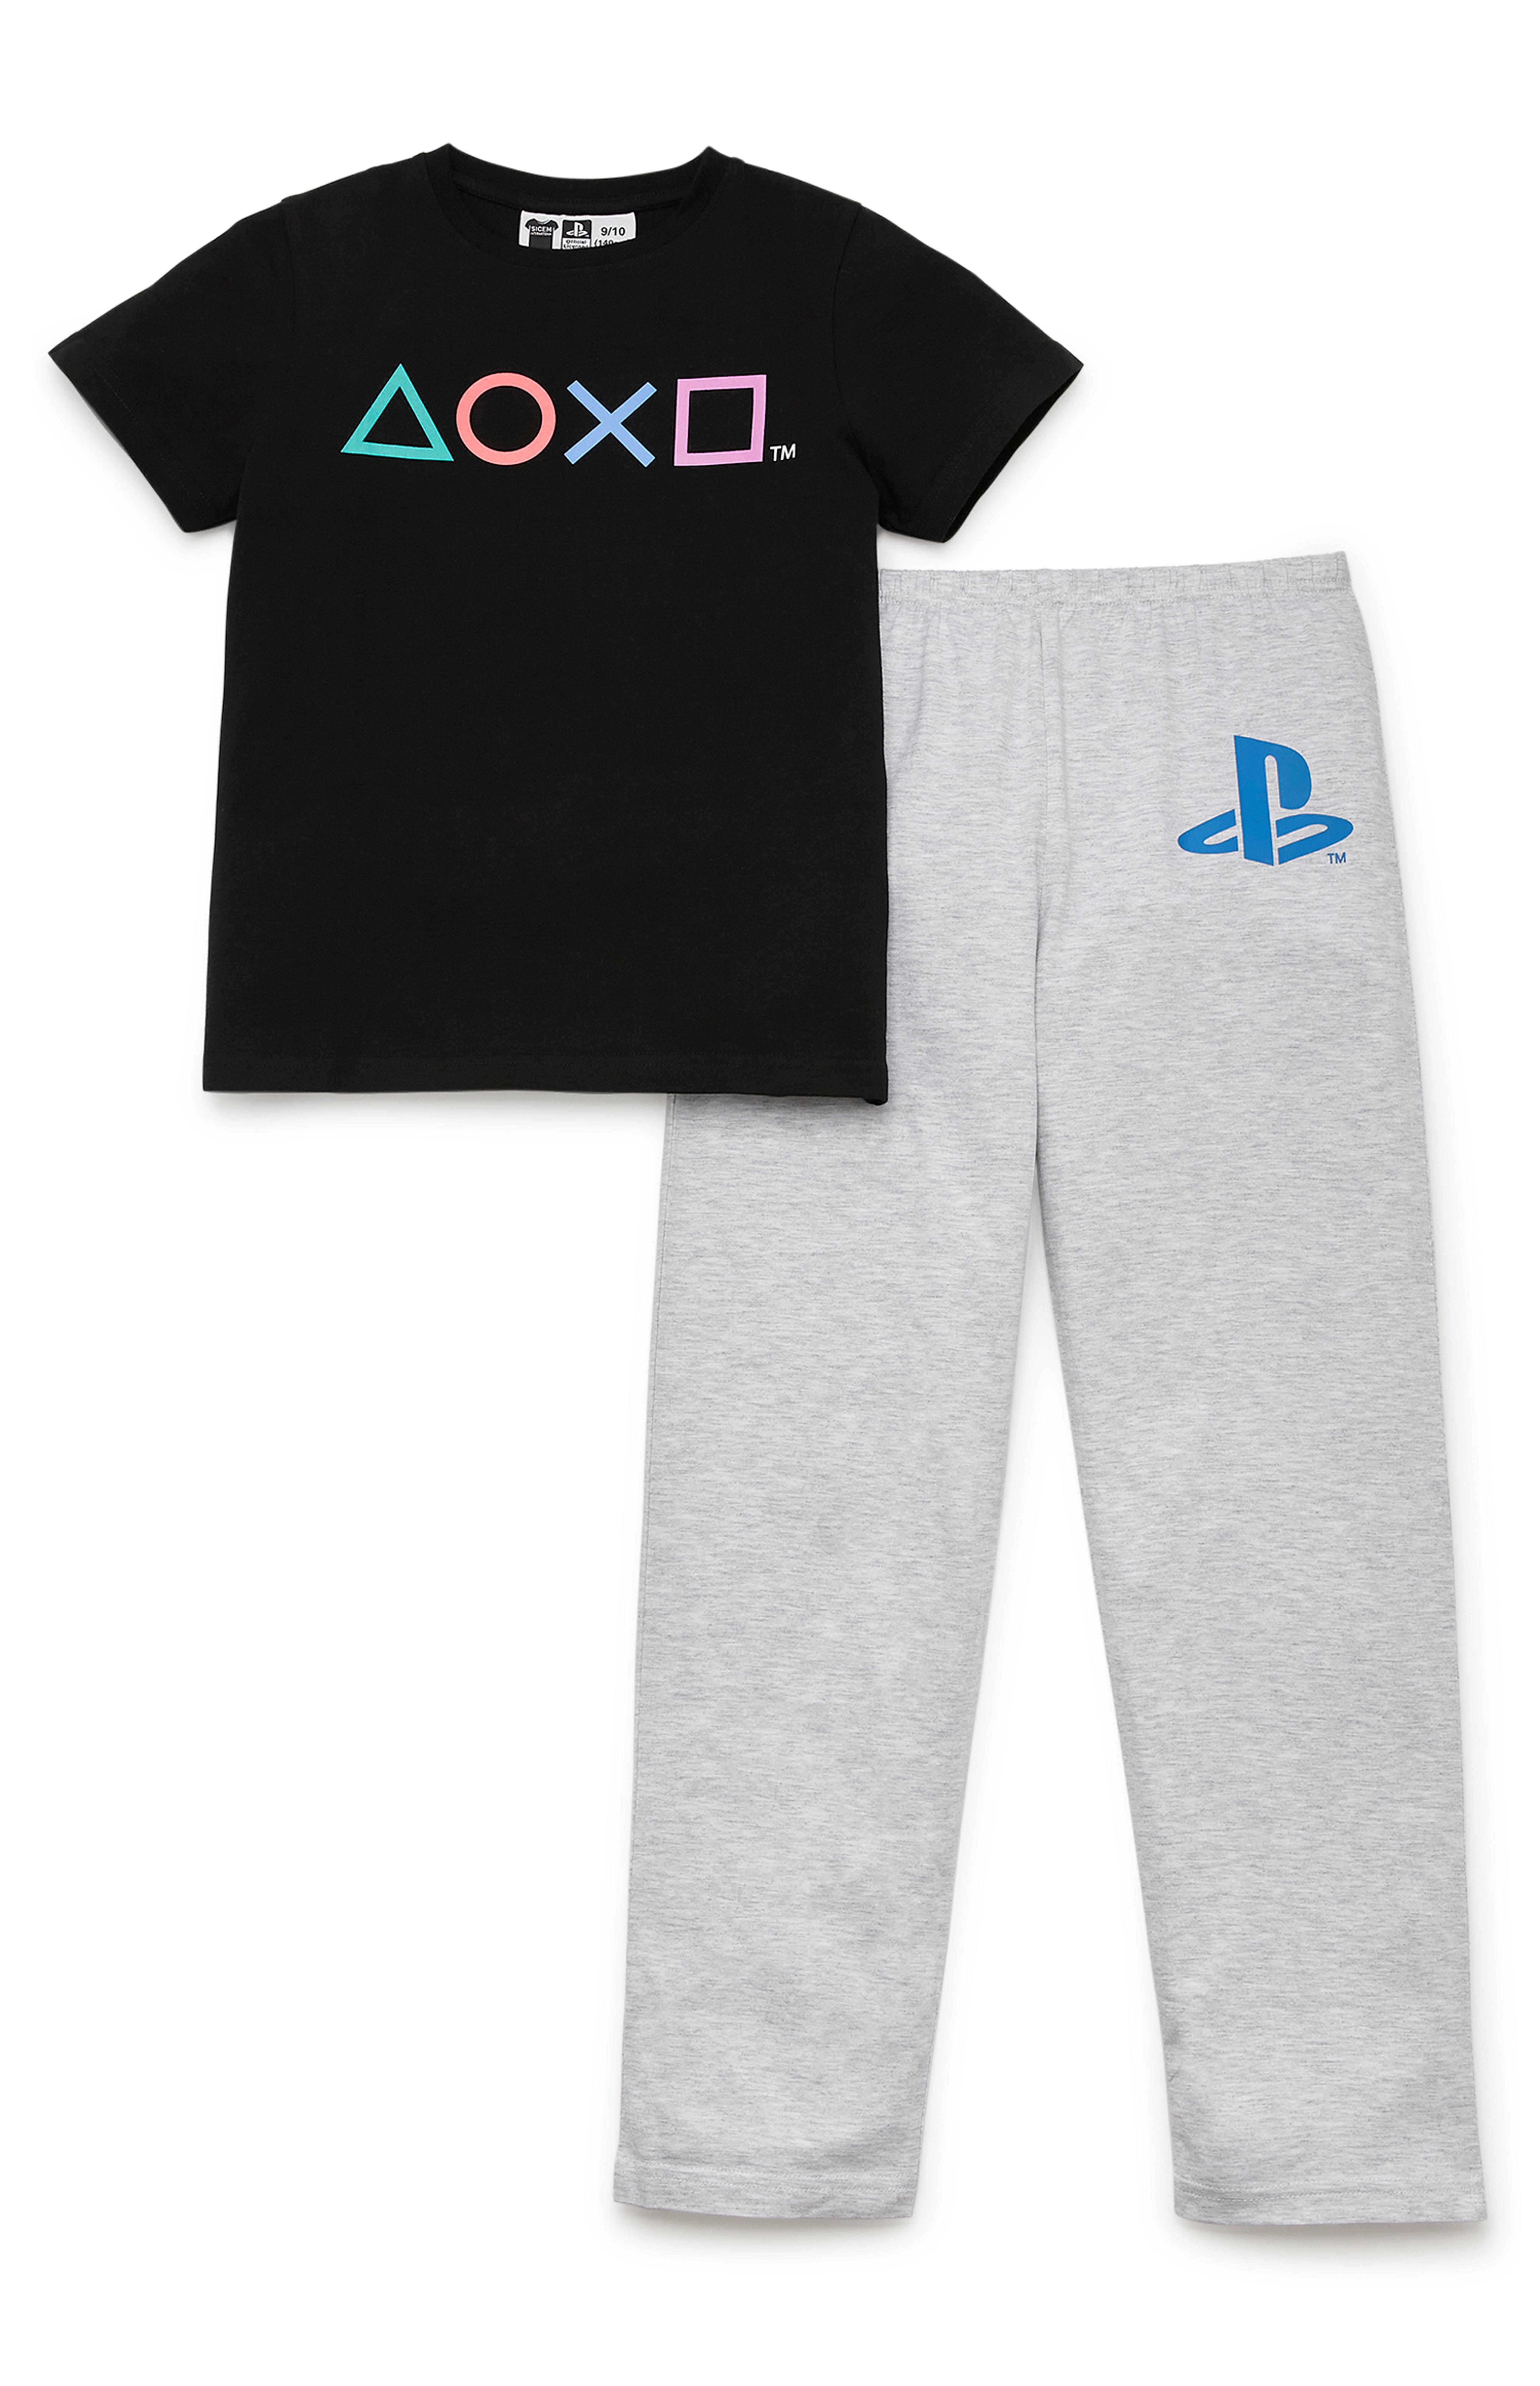 Older Boy Playstation Pyjamas 2 Pack Kids Pyjamas Boys Clothes Kids Clothes All Primark Products Penneys